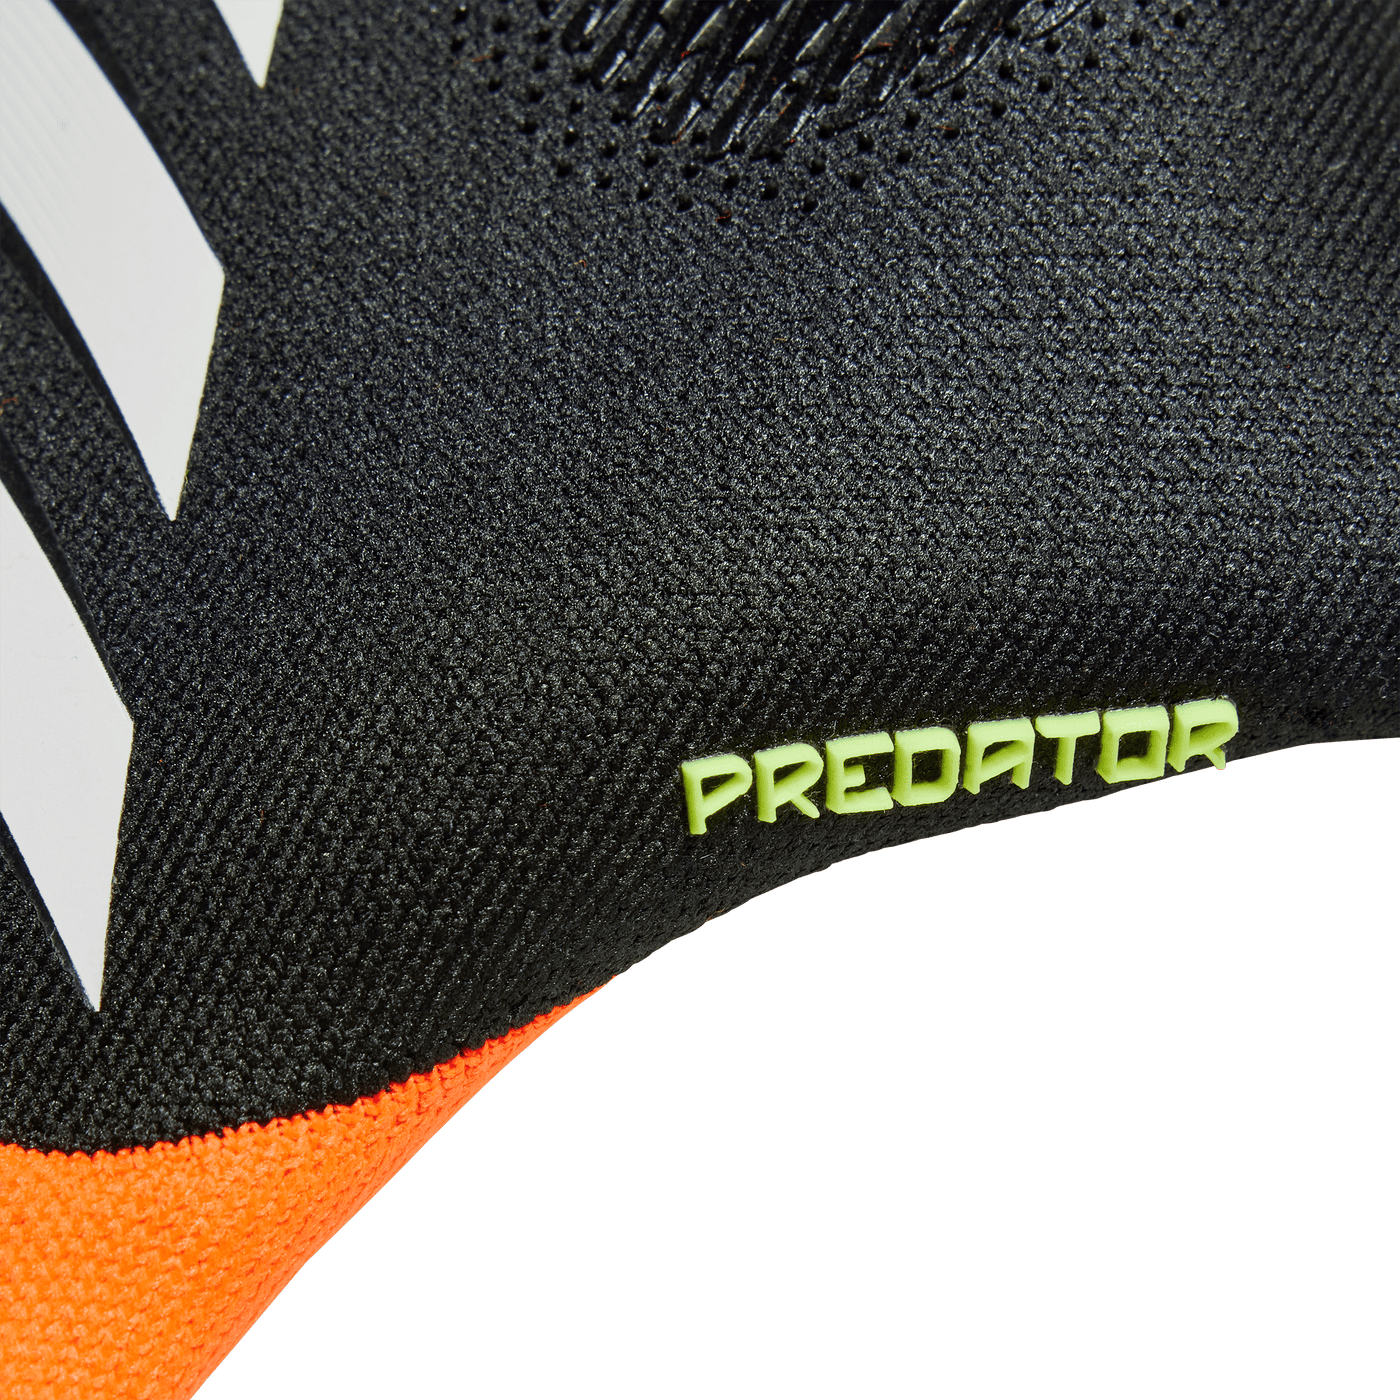 Adidas Predator Pro Goalkeeper Gloves - Black Solar Red Yellow